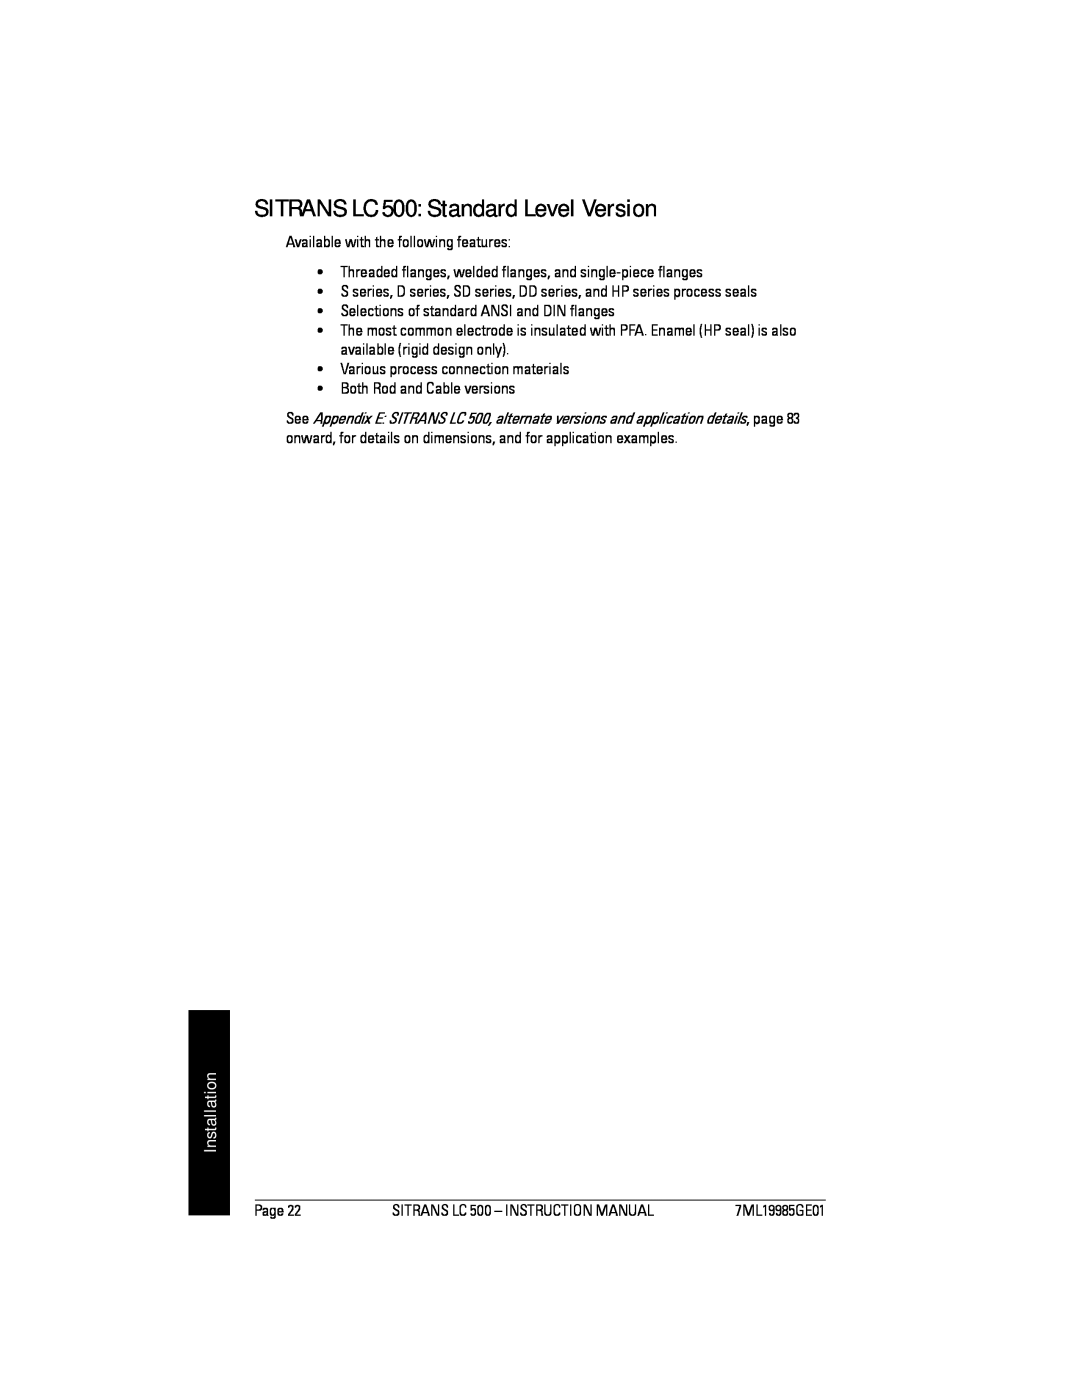 Siemens Sitrans instruction manual SITRANS LC 500 Standard Level Version, Installation 